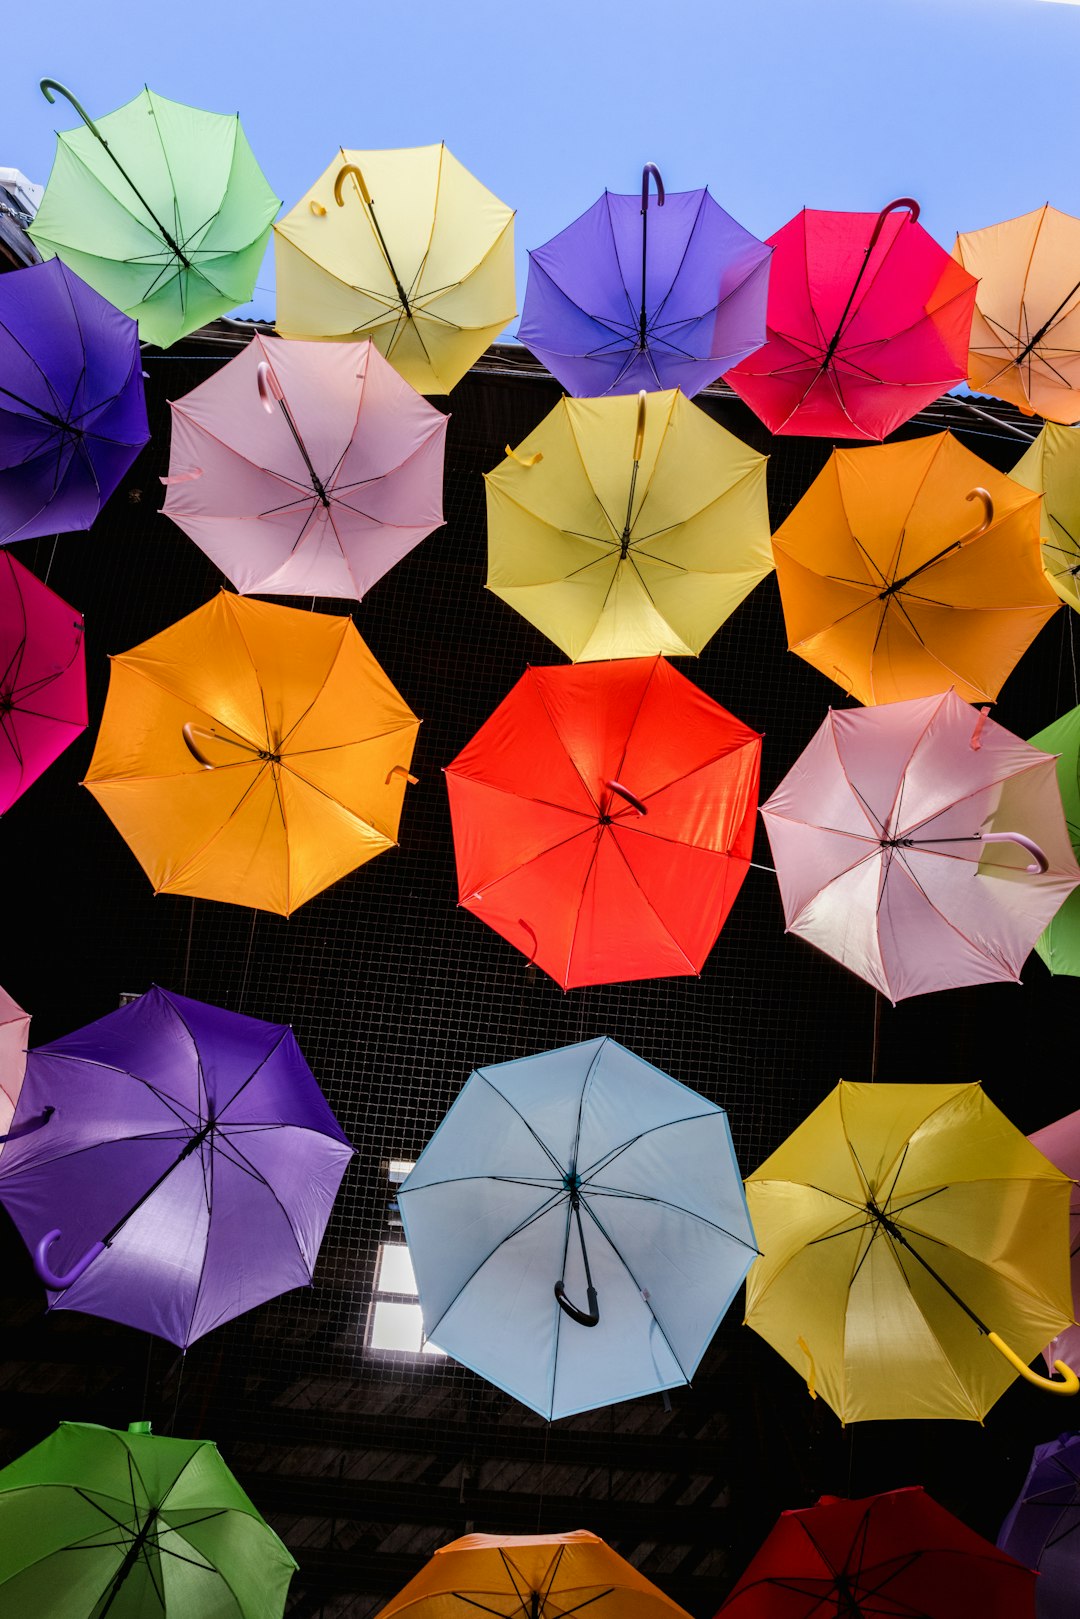 assorted umbrellas on the street